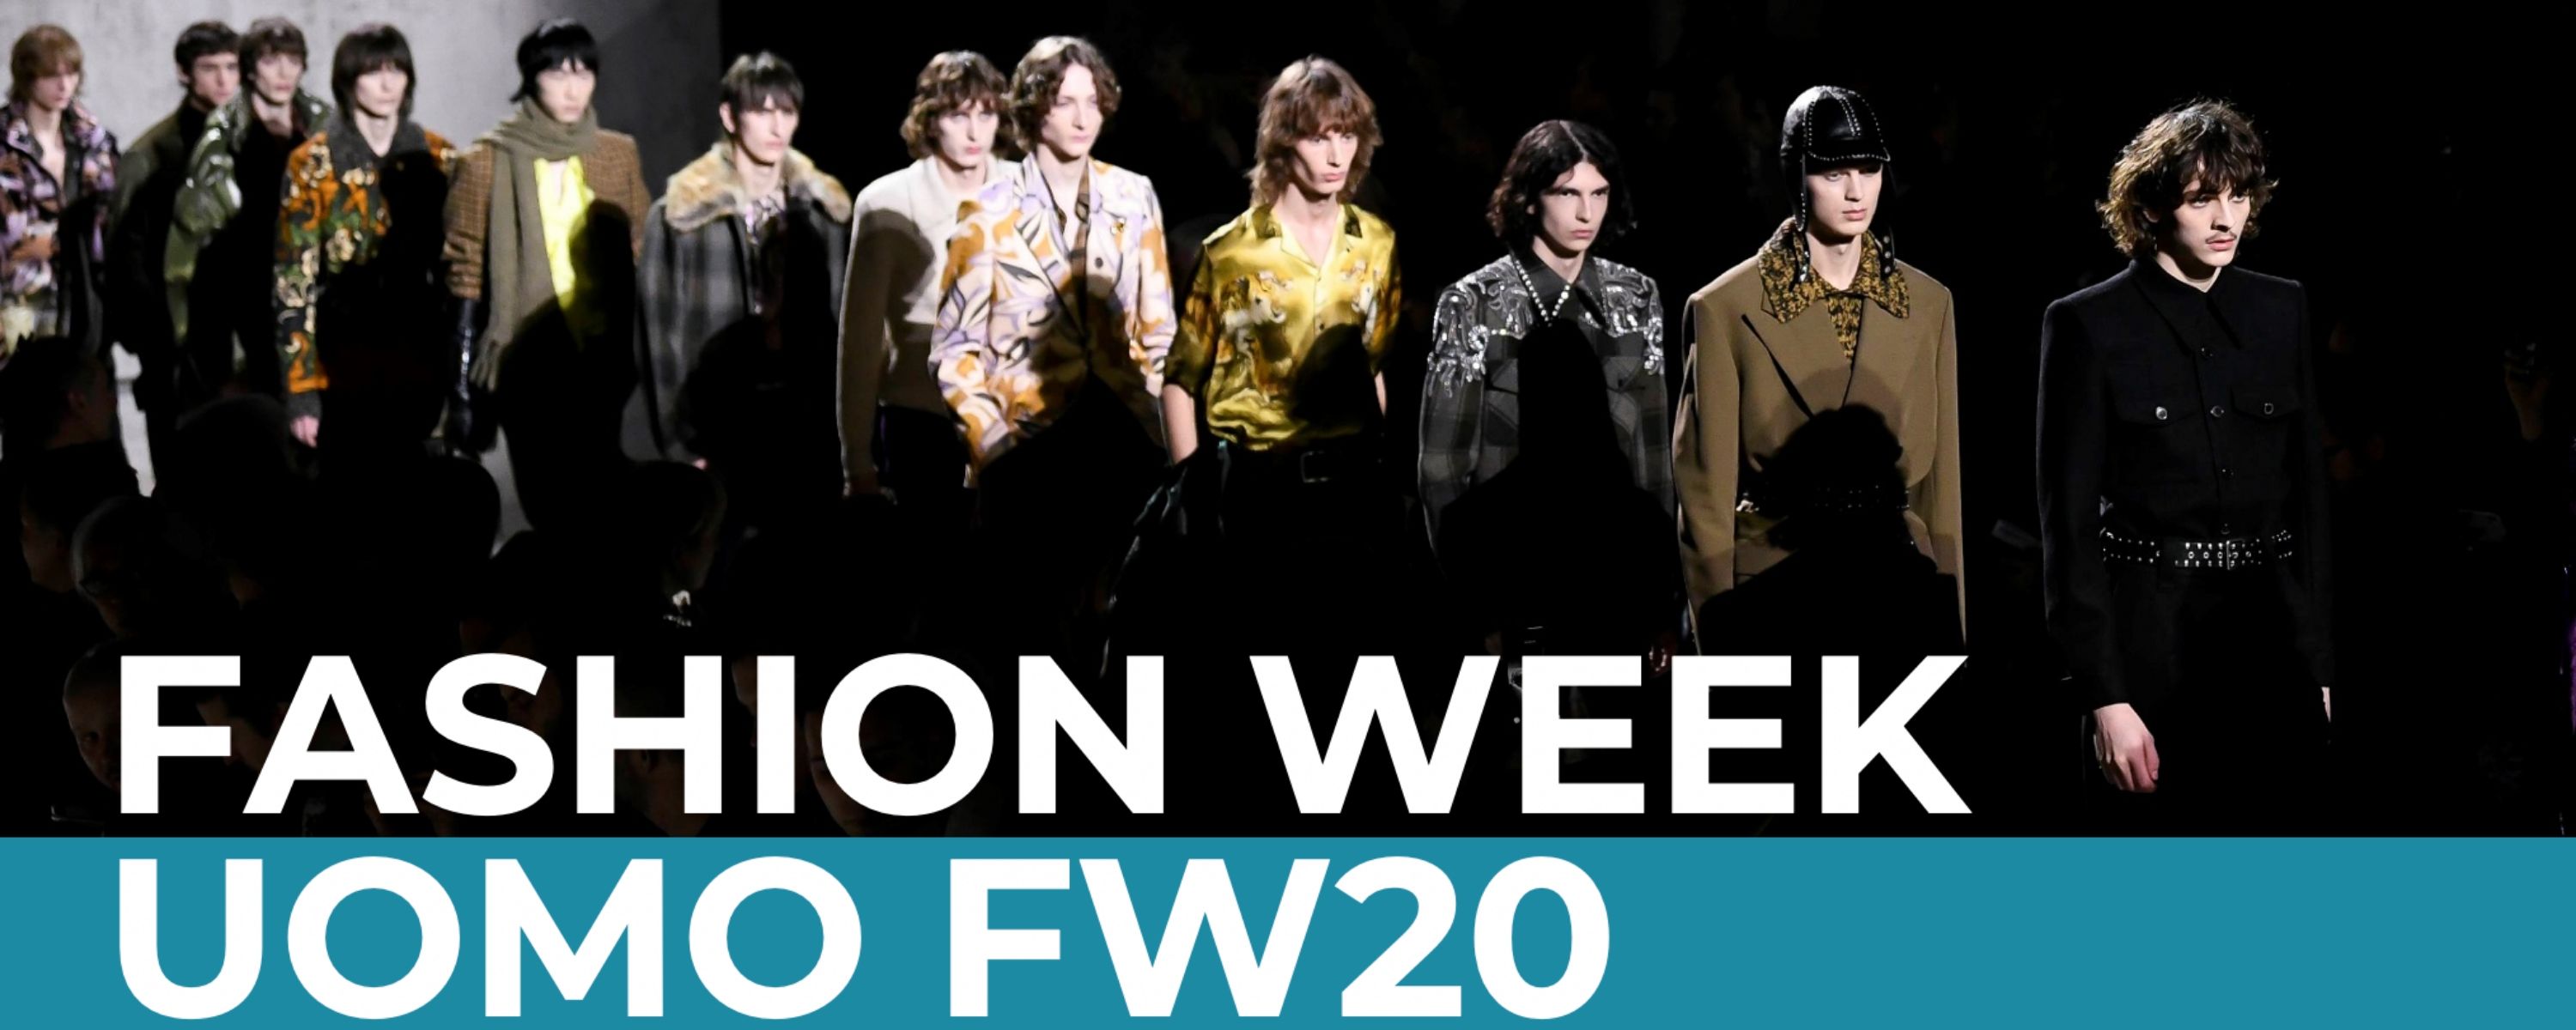 Fashion Week Uomo FW20